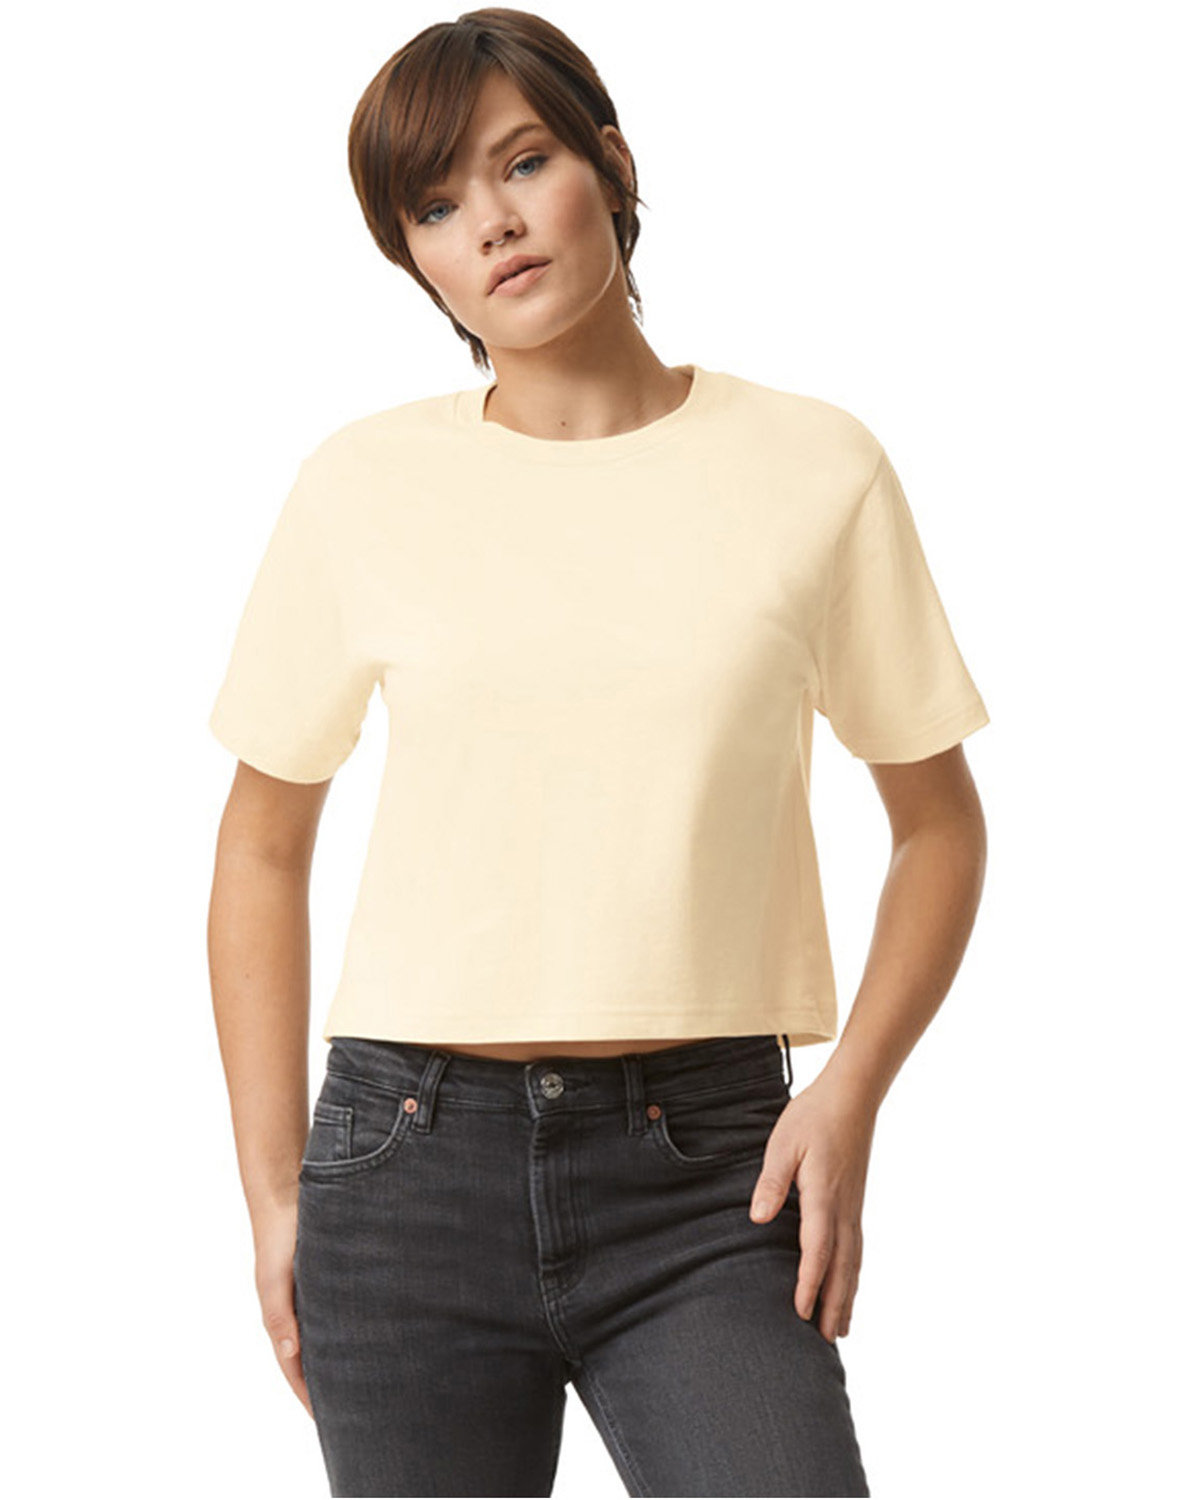 American Apparel Ladies' Fine Jersey Boxy T-Shirt CREAM 